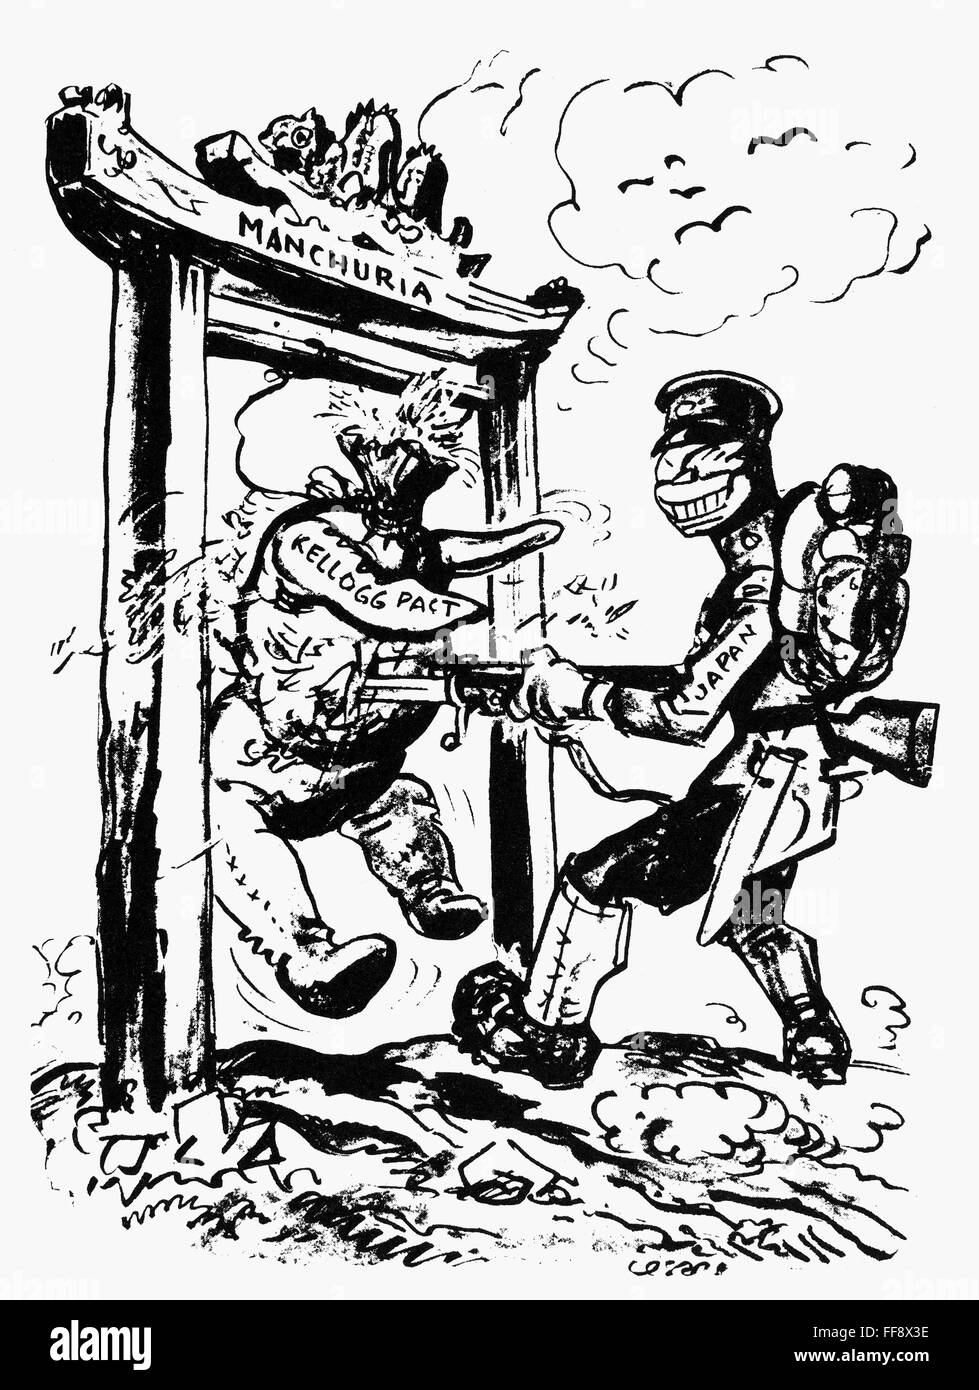 JAPAN: MANCHURIA, 1931. /n'The Open Door.' American cartoon by Oscar Edward Cesare, 1931, on Japan's seizure of Manchuria and disregard for the Kellog-Briand Pact. Stock Photo